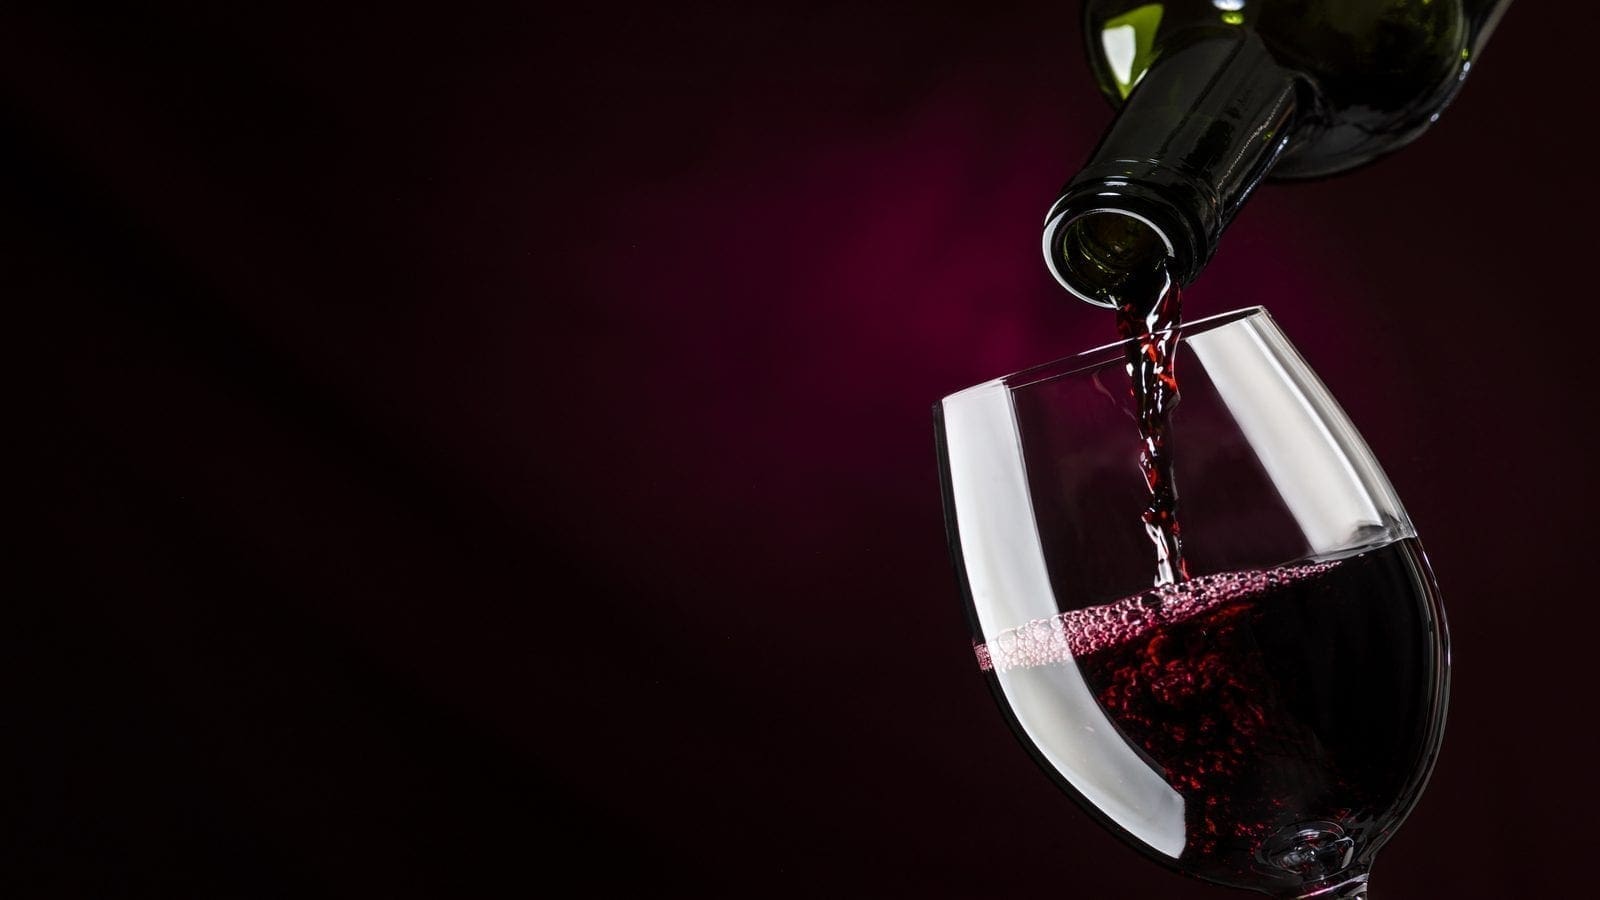 SA wine gurus Blaauwklippen, Van Loveren sign new partnership to accelerate premium offerings